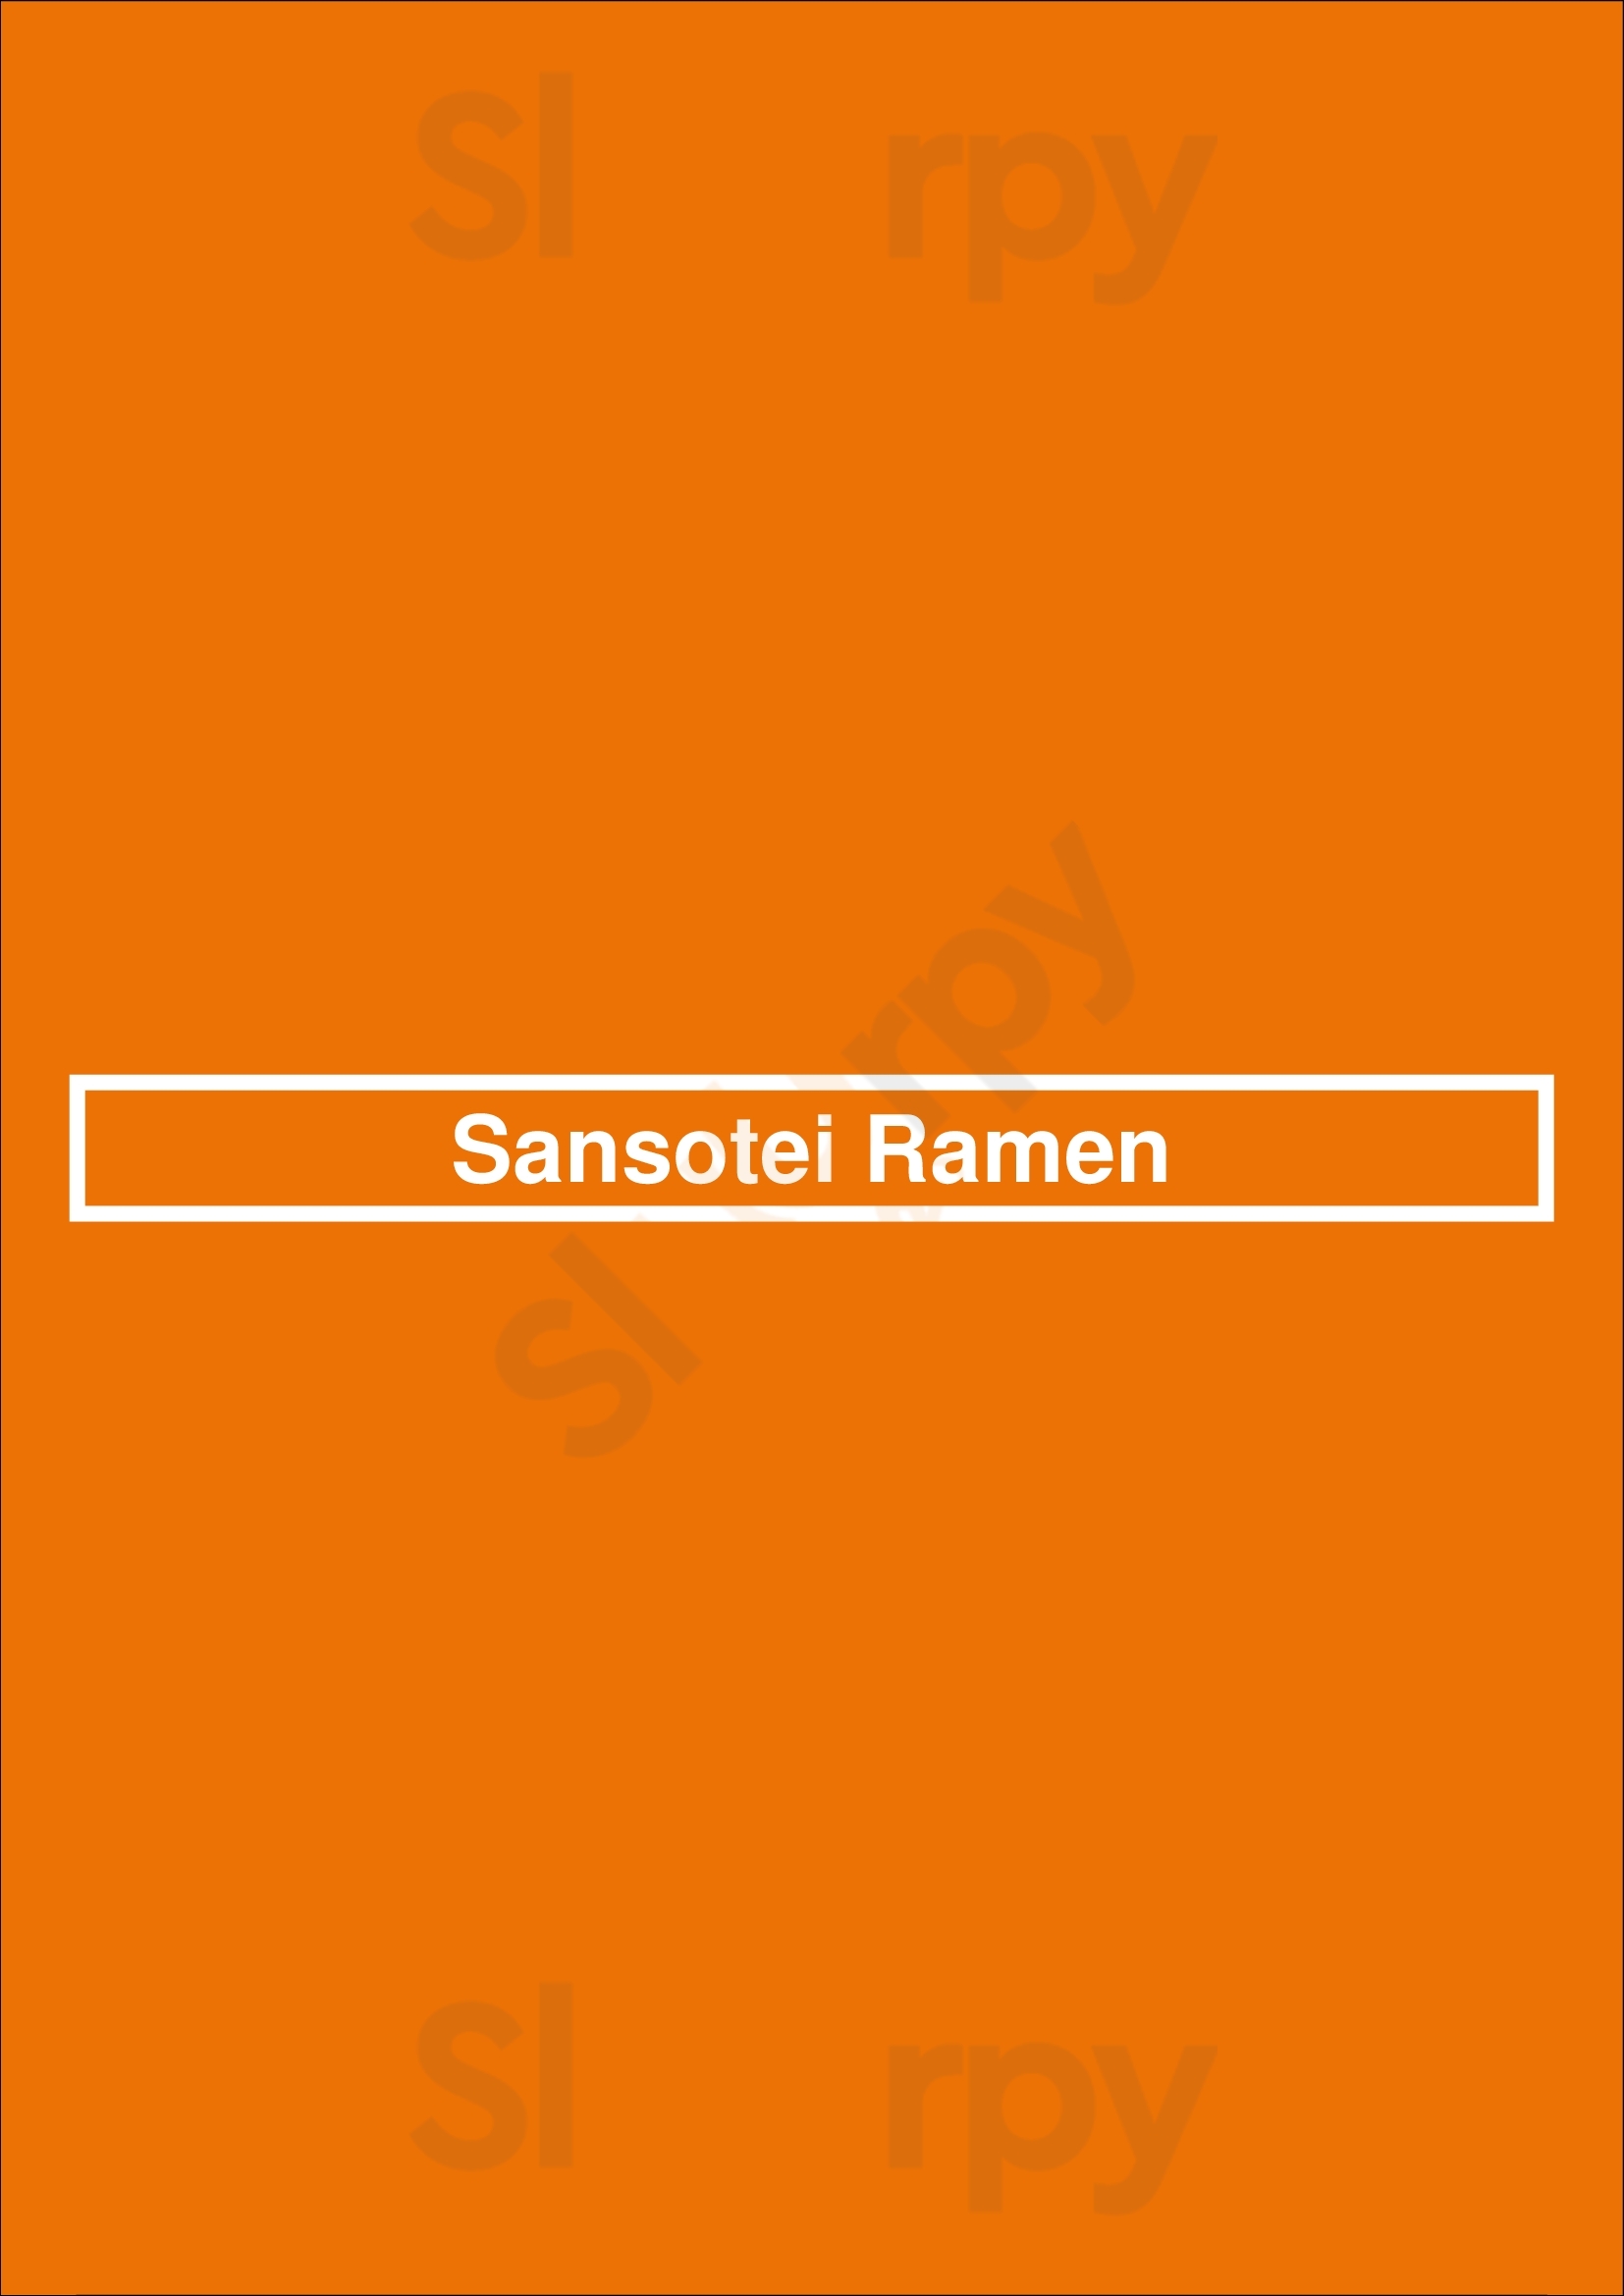 Sansotei Ramen Richmond Hill Menu - 1